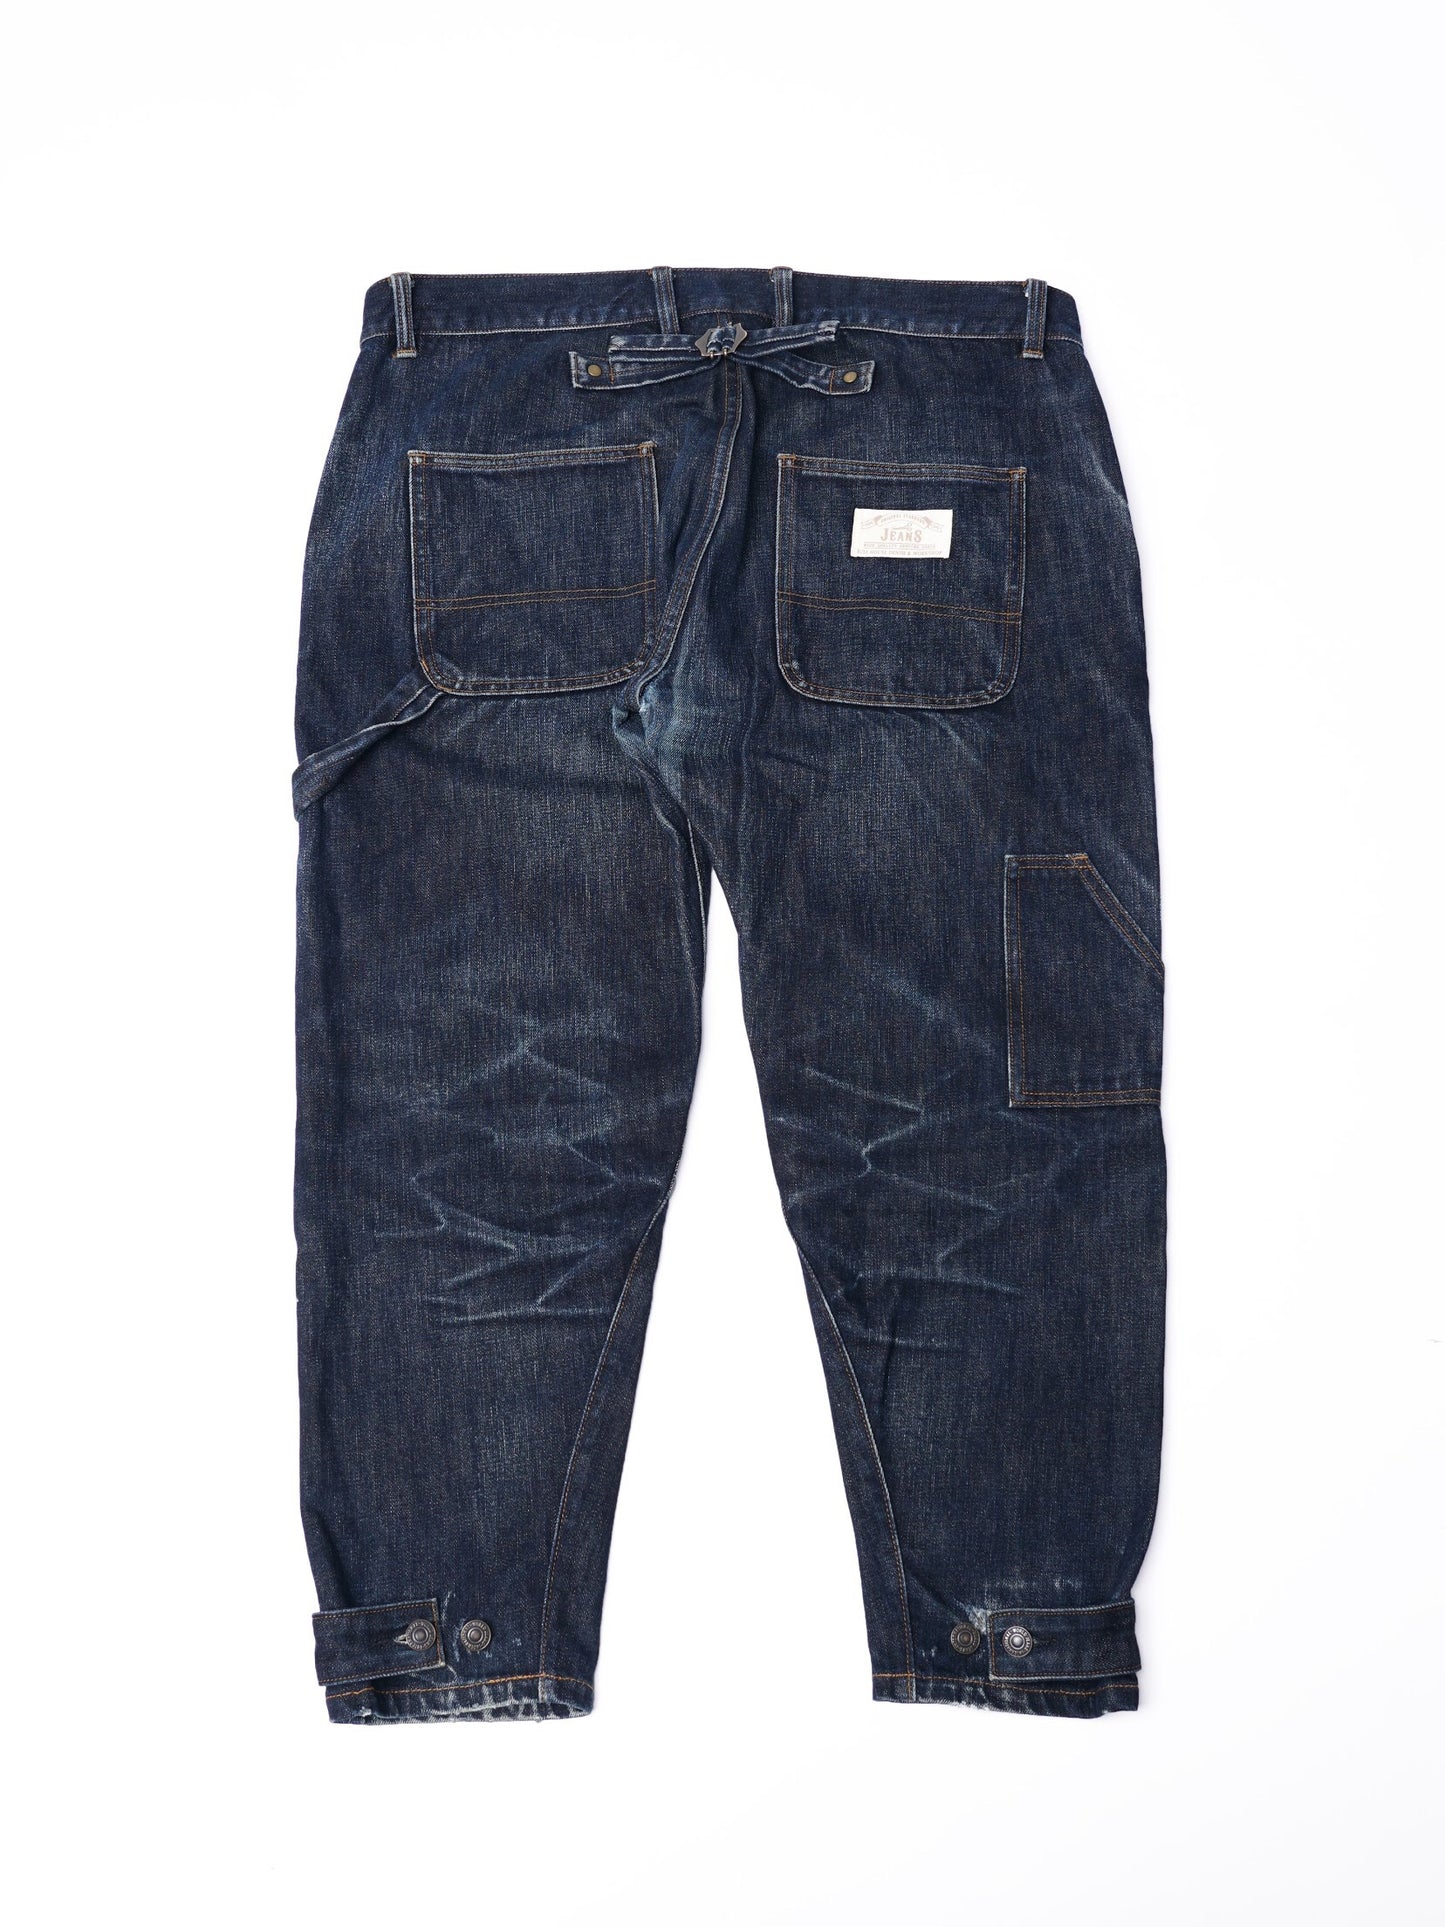 【Order】W02 15oz. Collect Mills Denim Worker Jeans